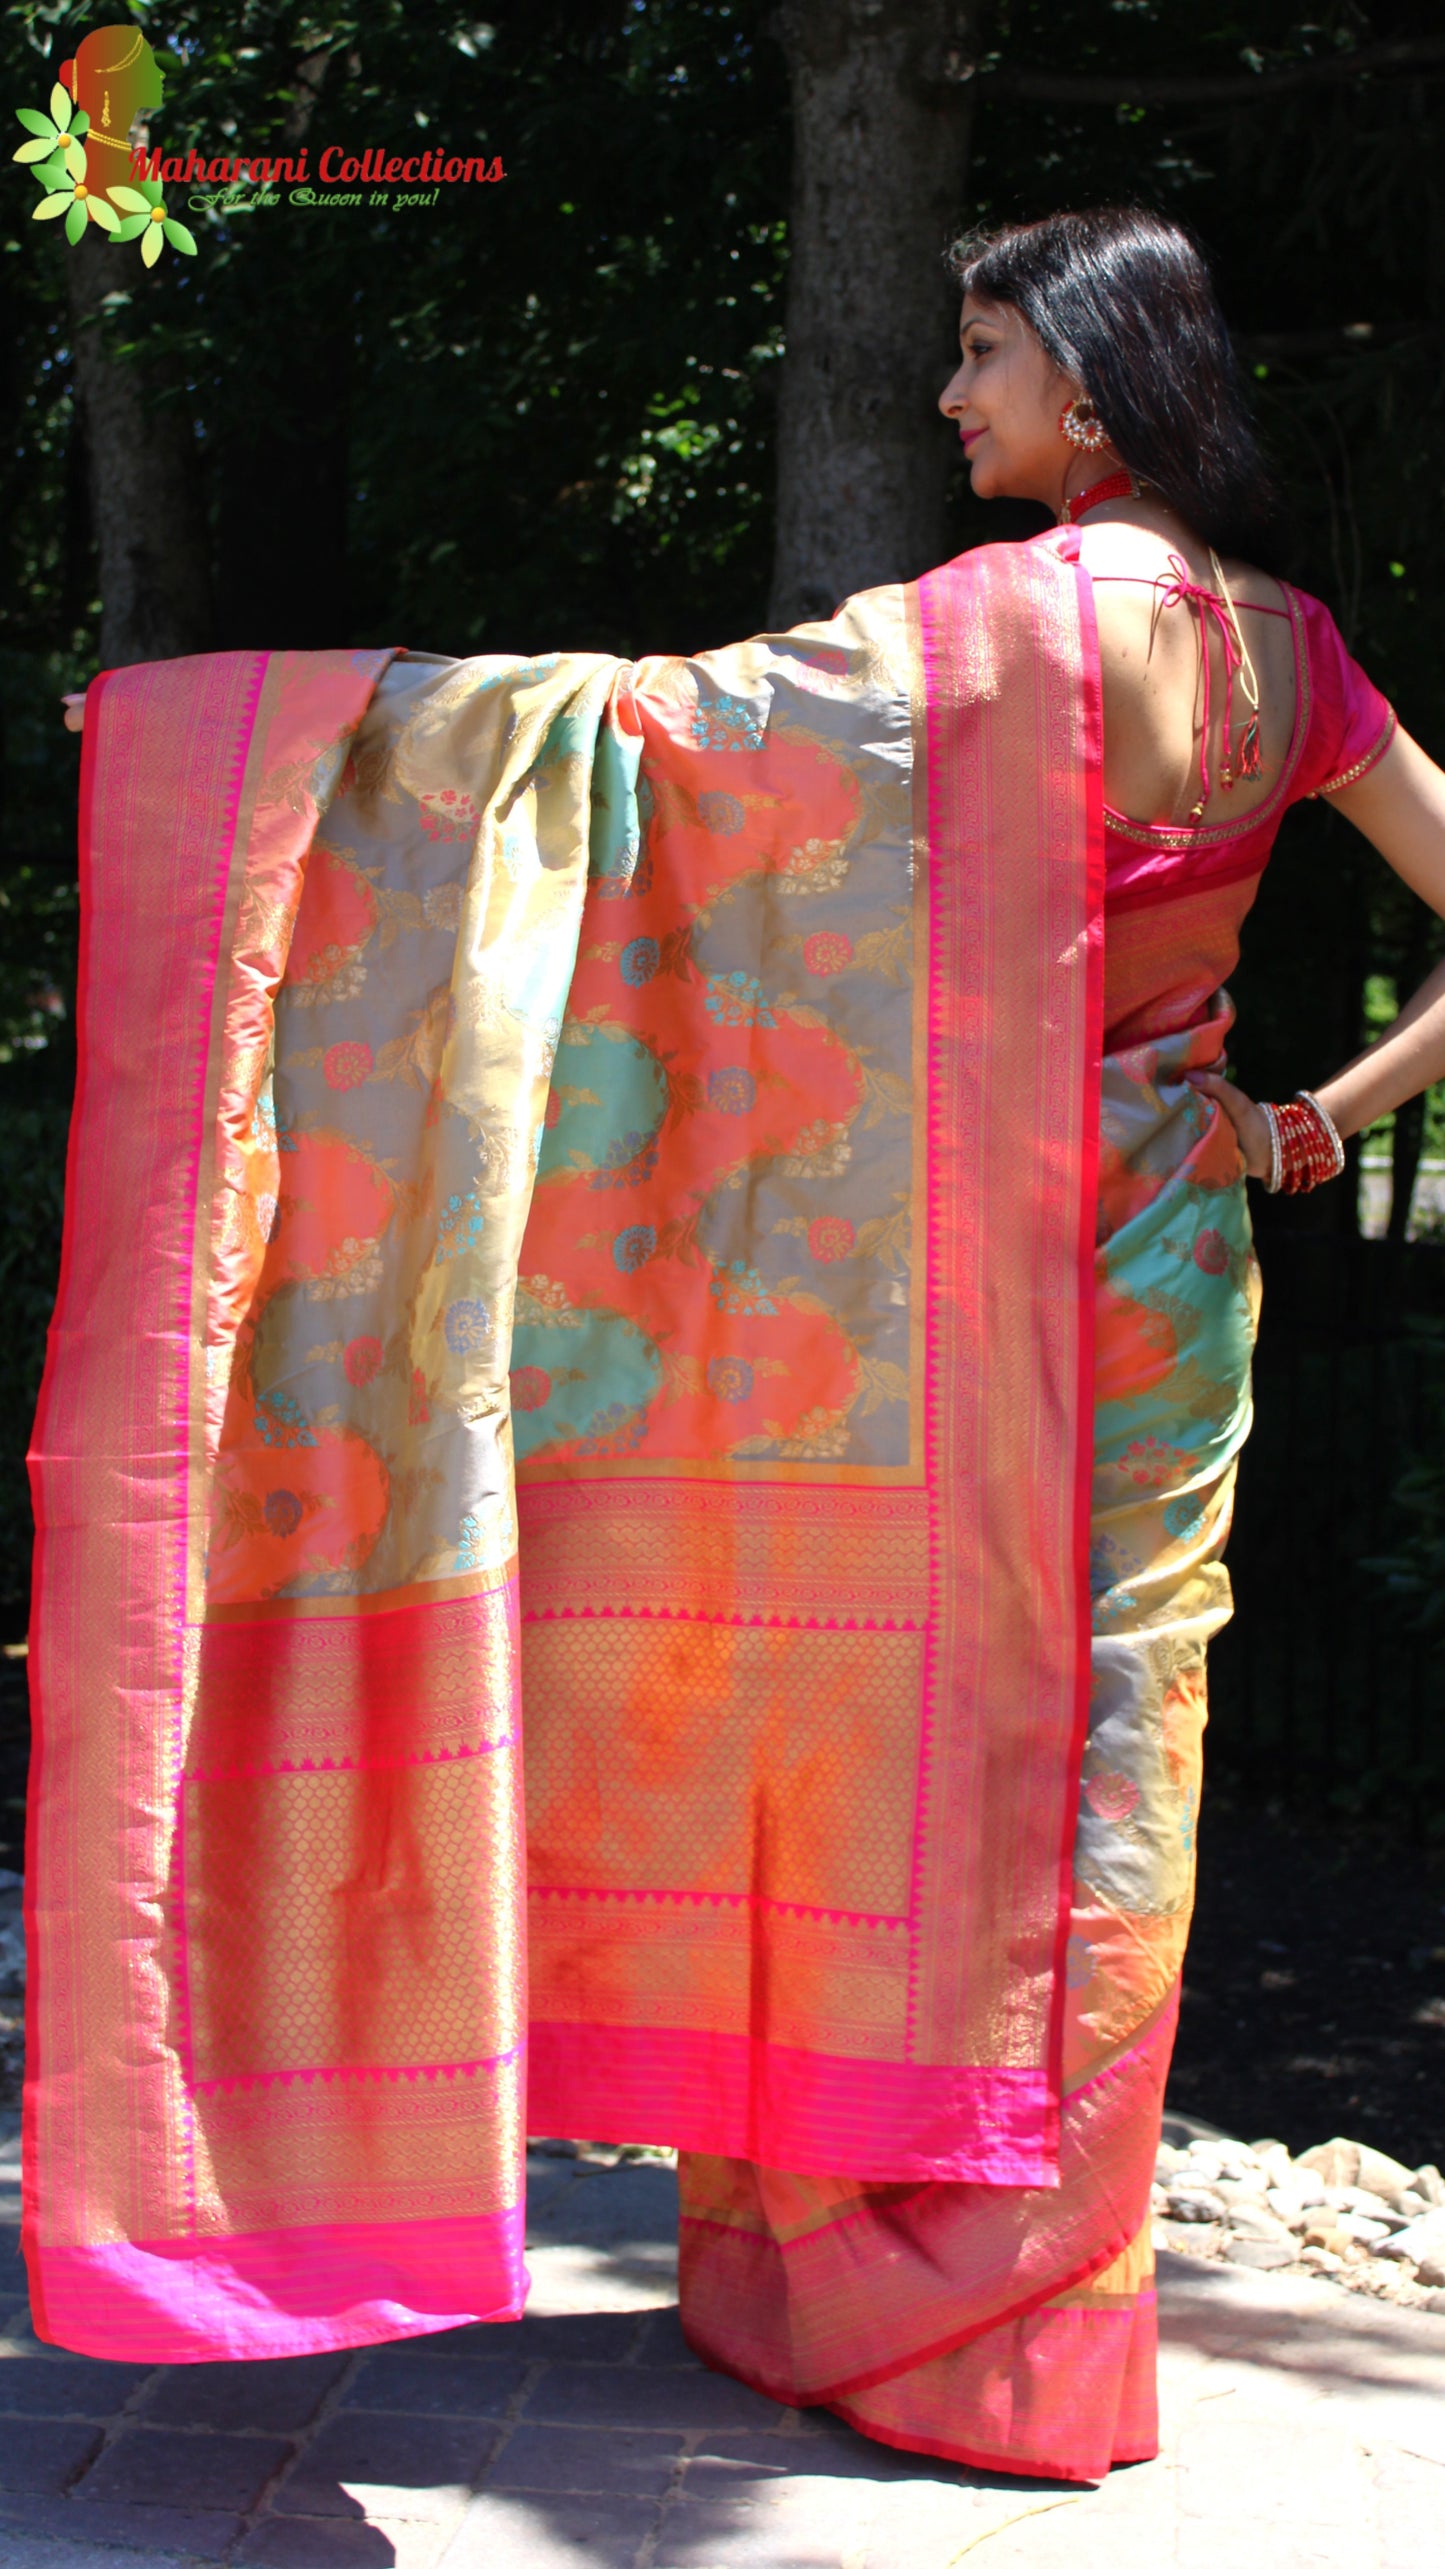 Maharani's Pure Banarasi Silk Saree - Orange and Teal (with stitched Blouse and Petticoat)